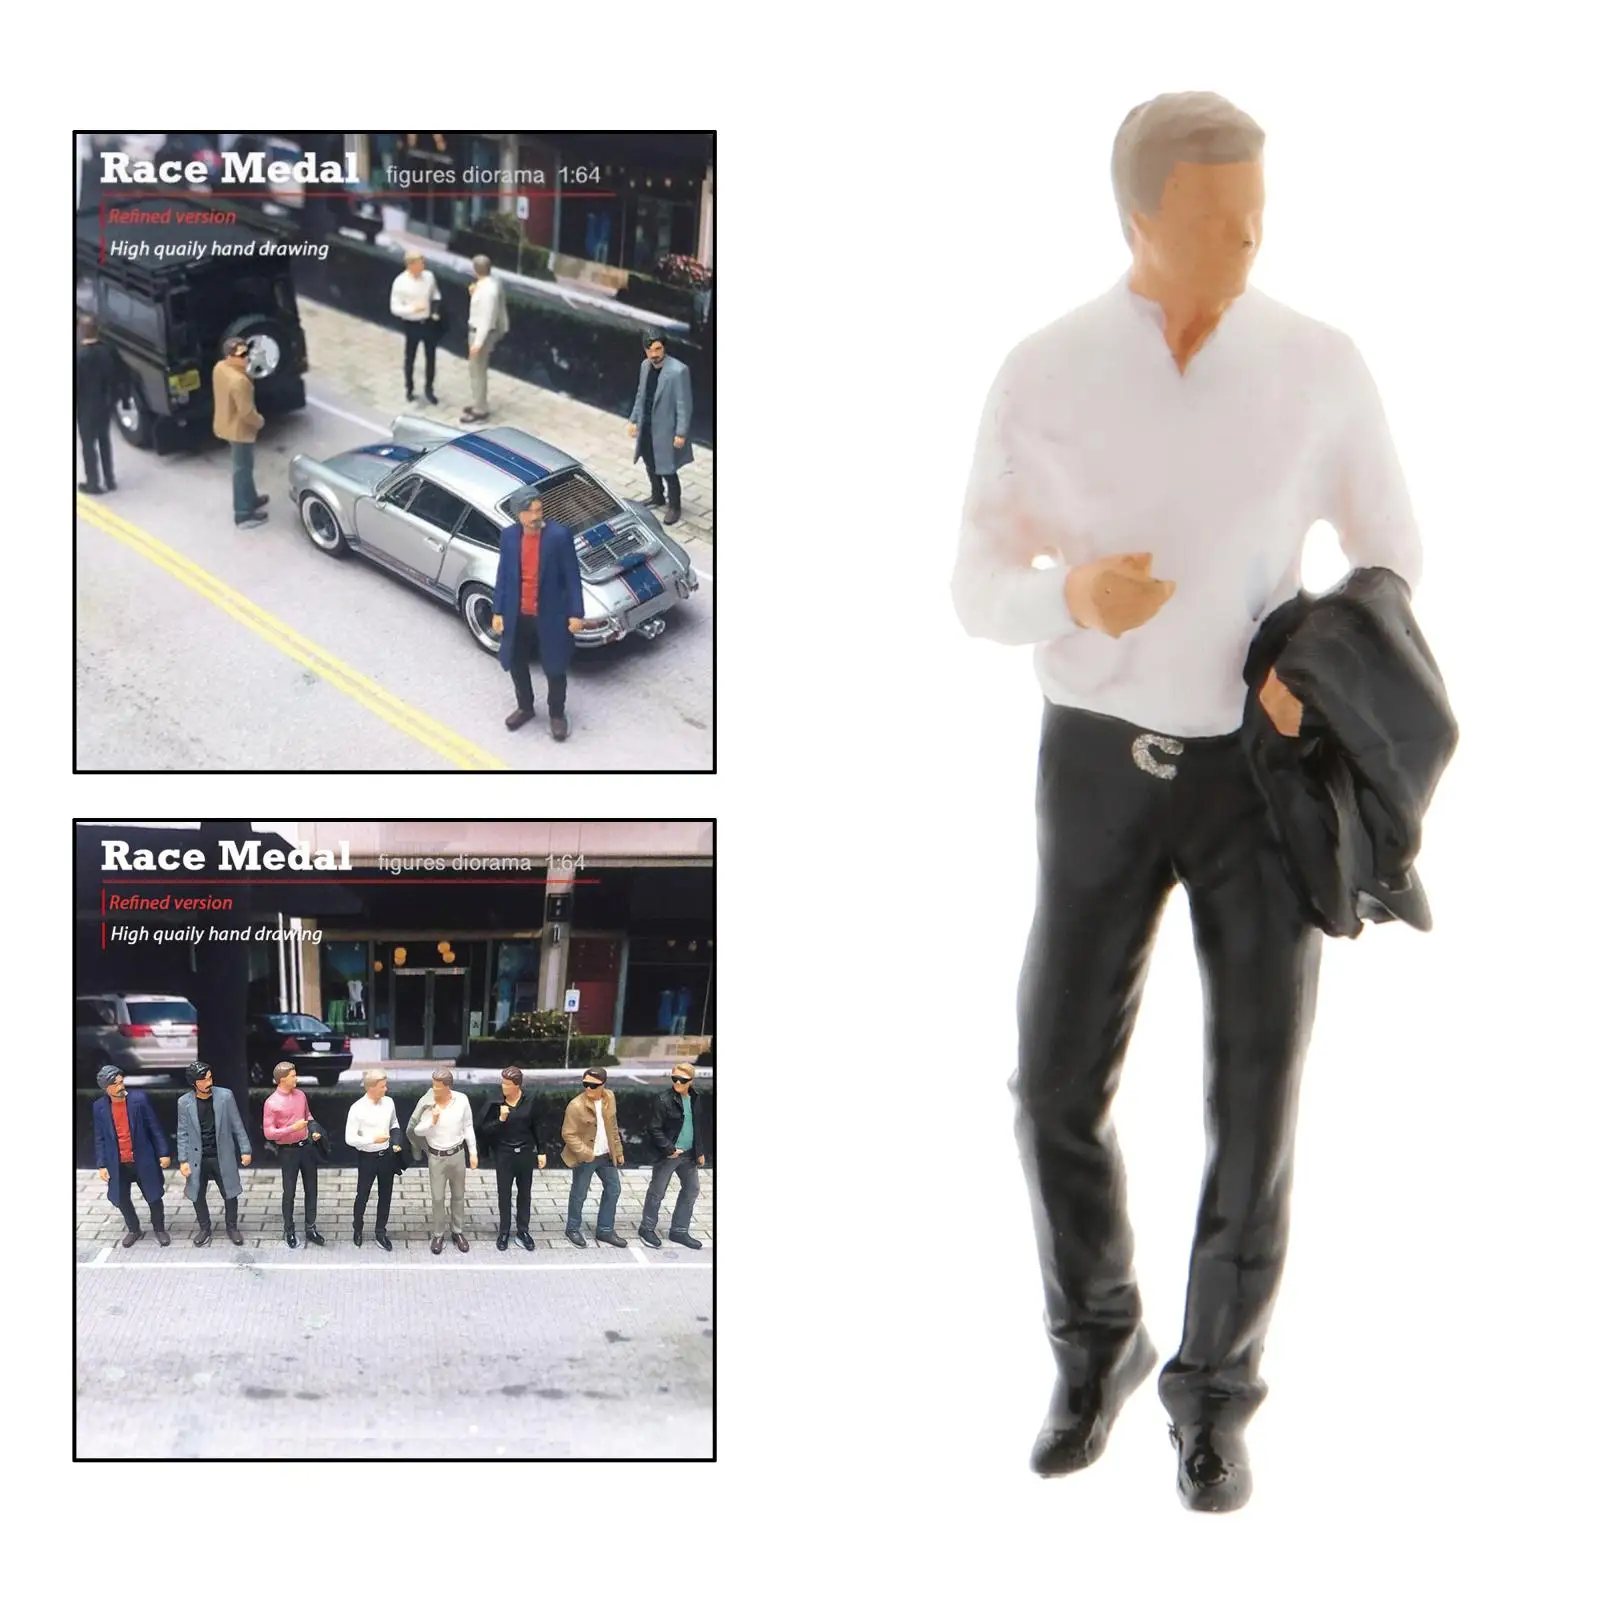 Mini 1/64 Diorama Figure People Suits Model Street Building Railway Road Park Buliding Layout Accs